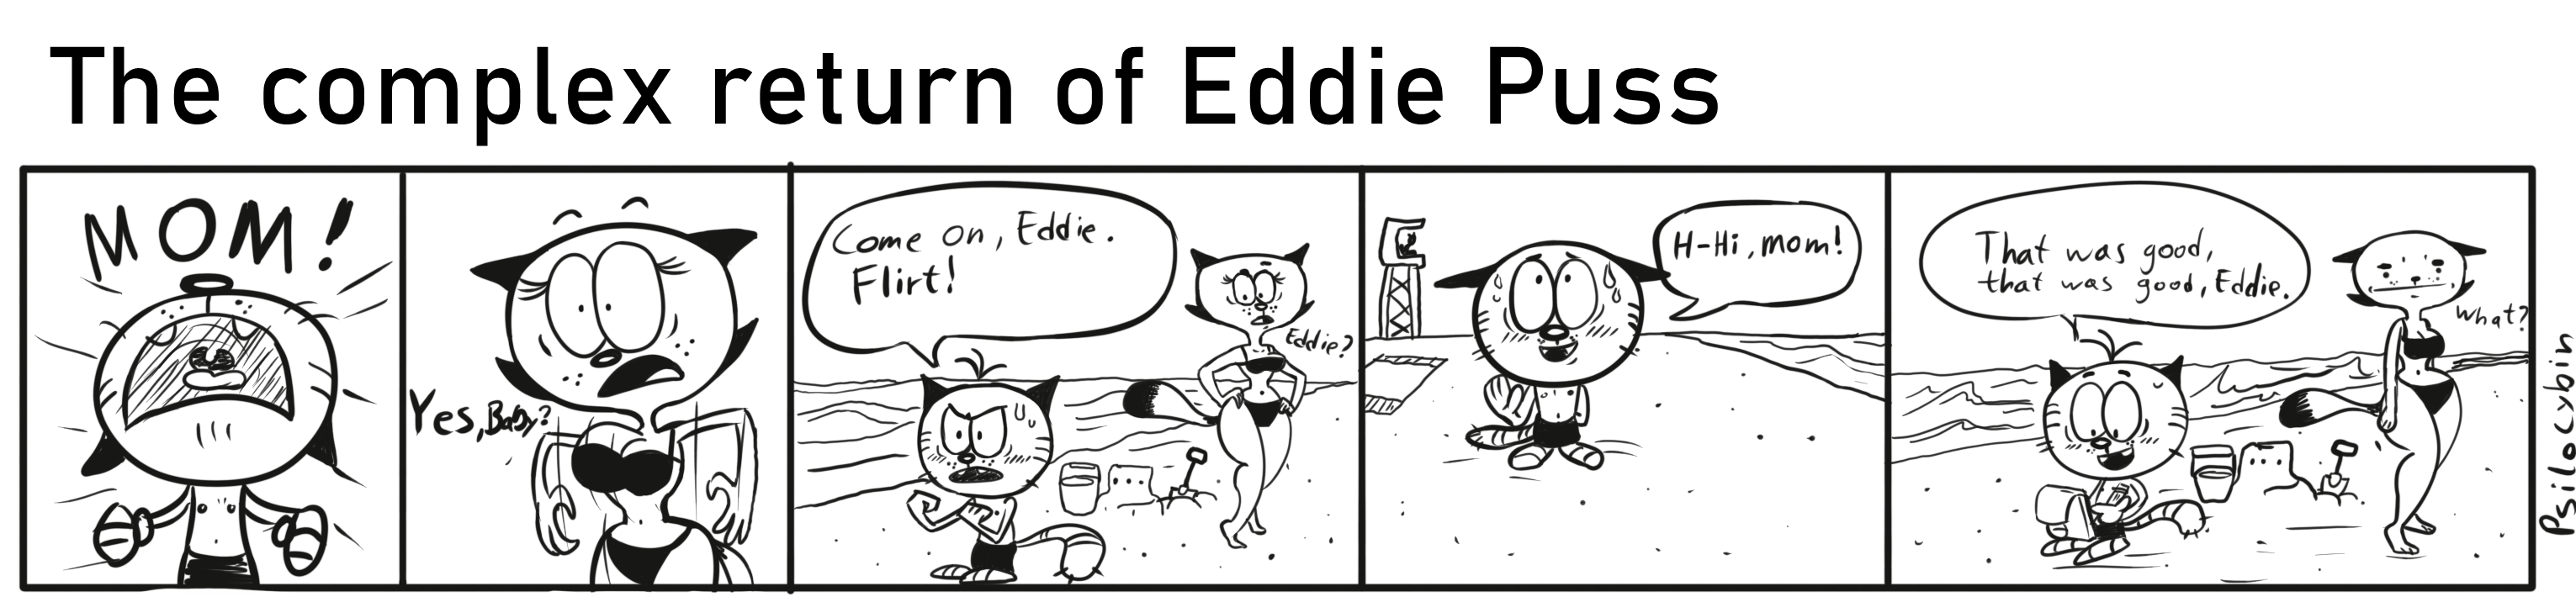 the complex adventures of eddie puss